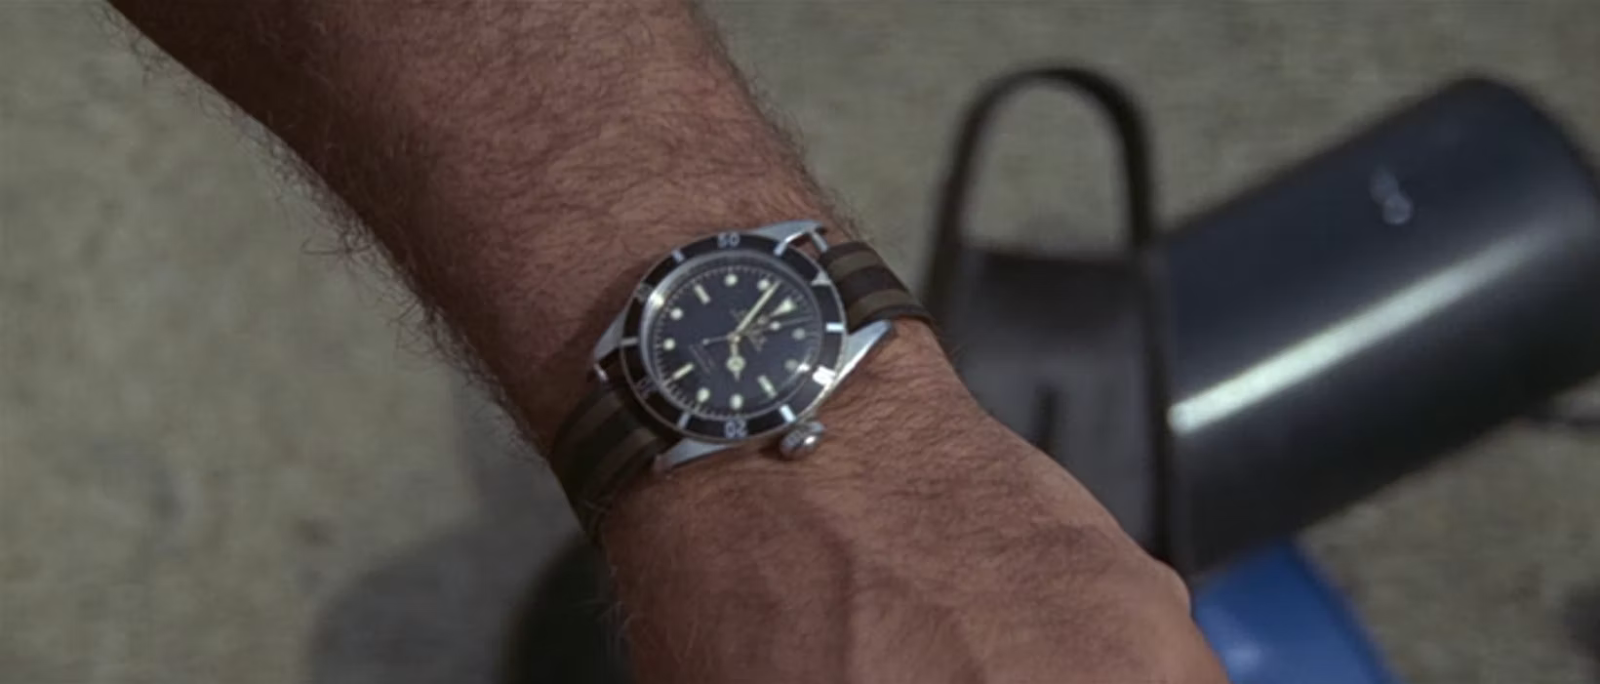 Rolex Submariner with a nylon strap on James Bonds' left wrist.